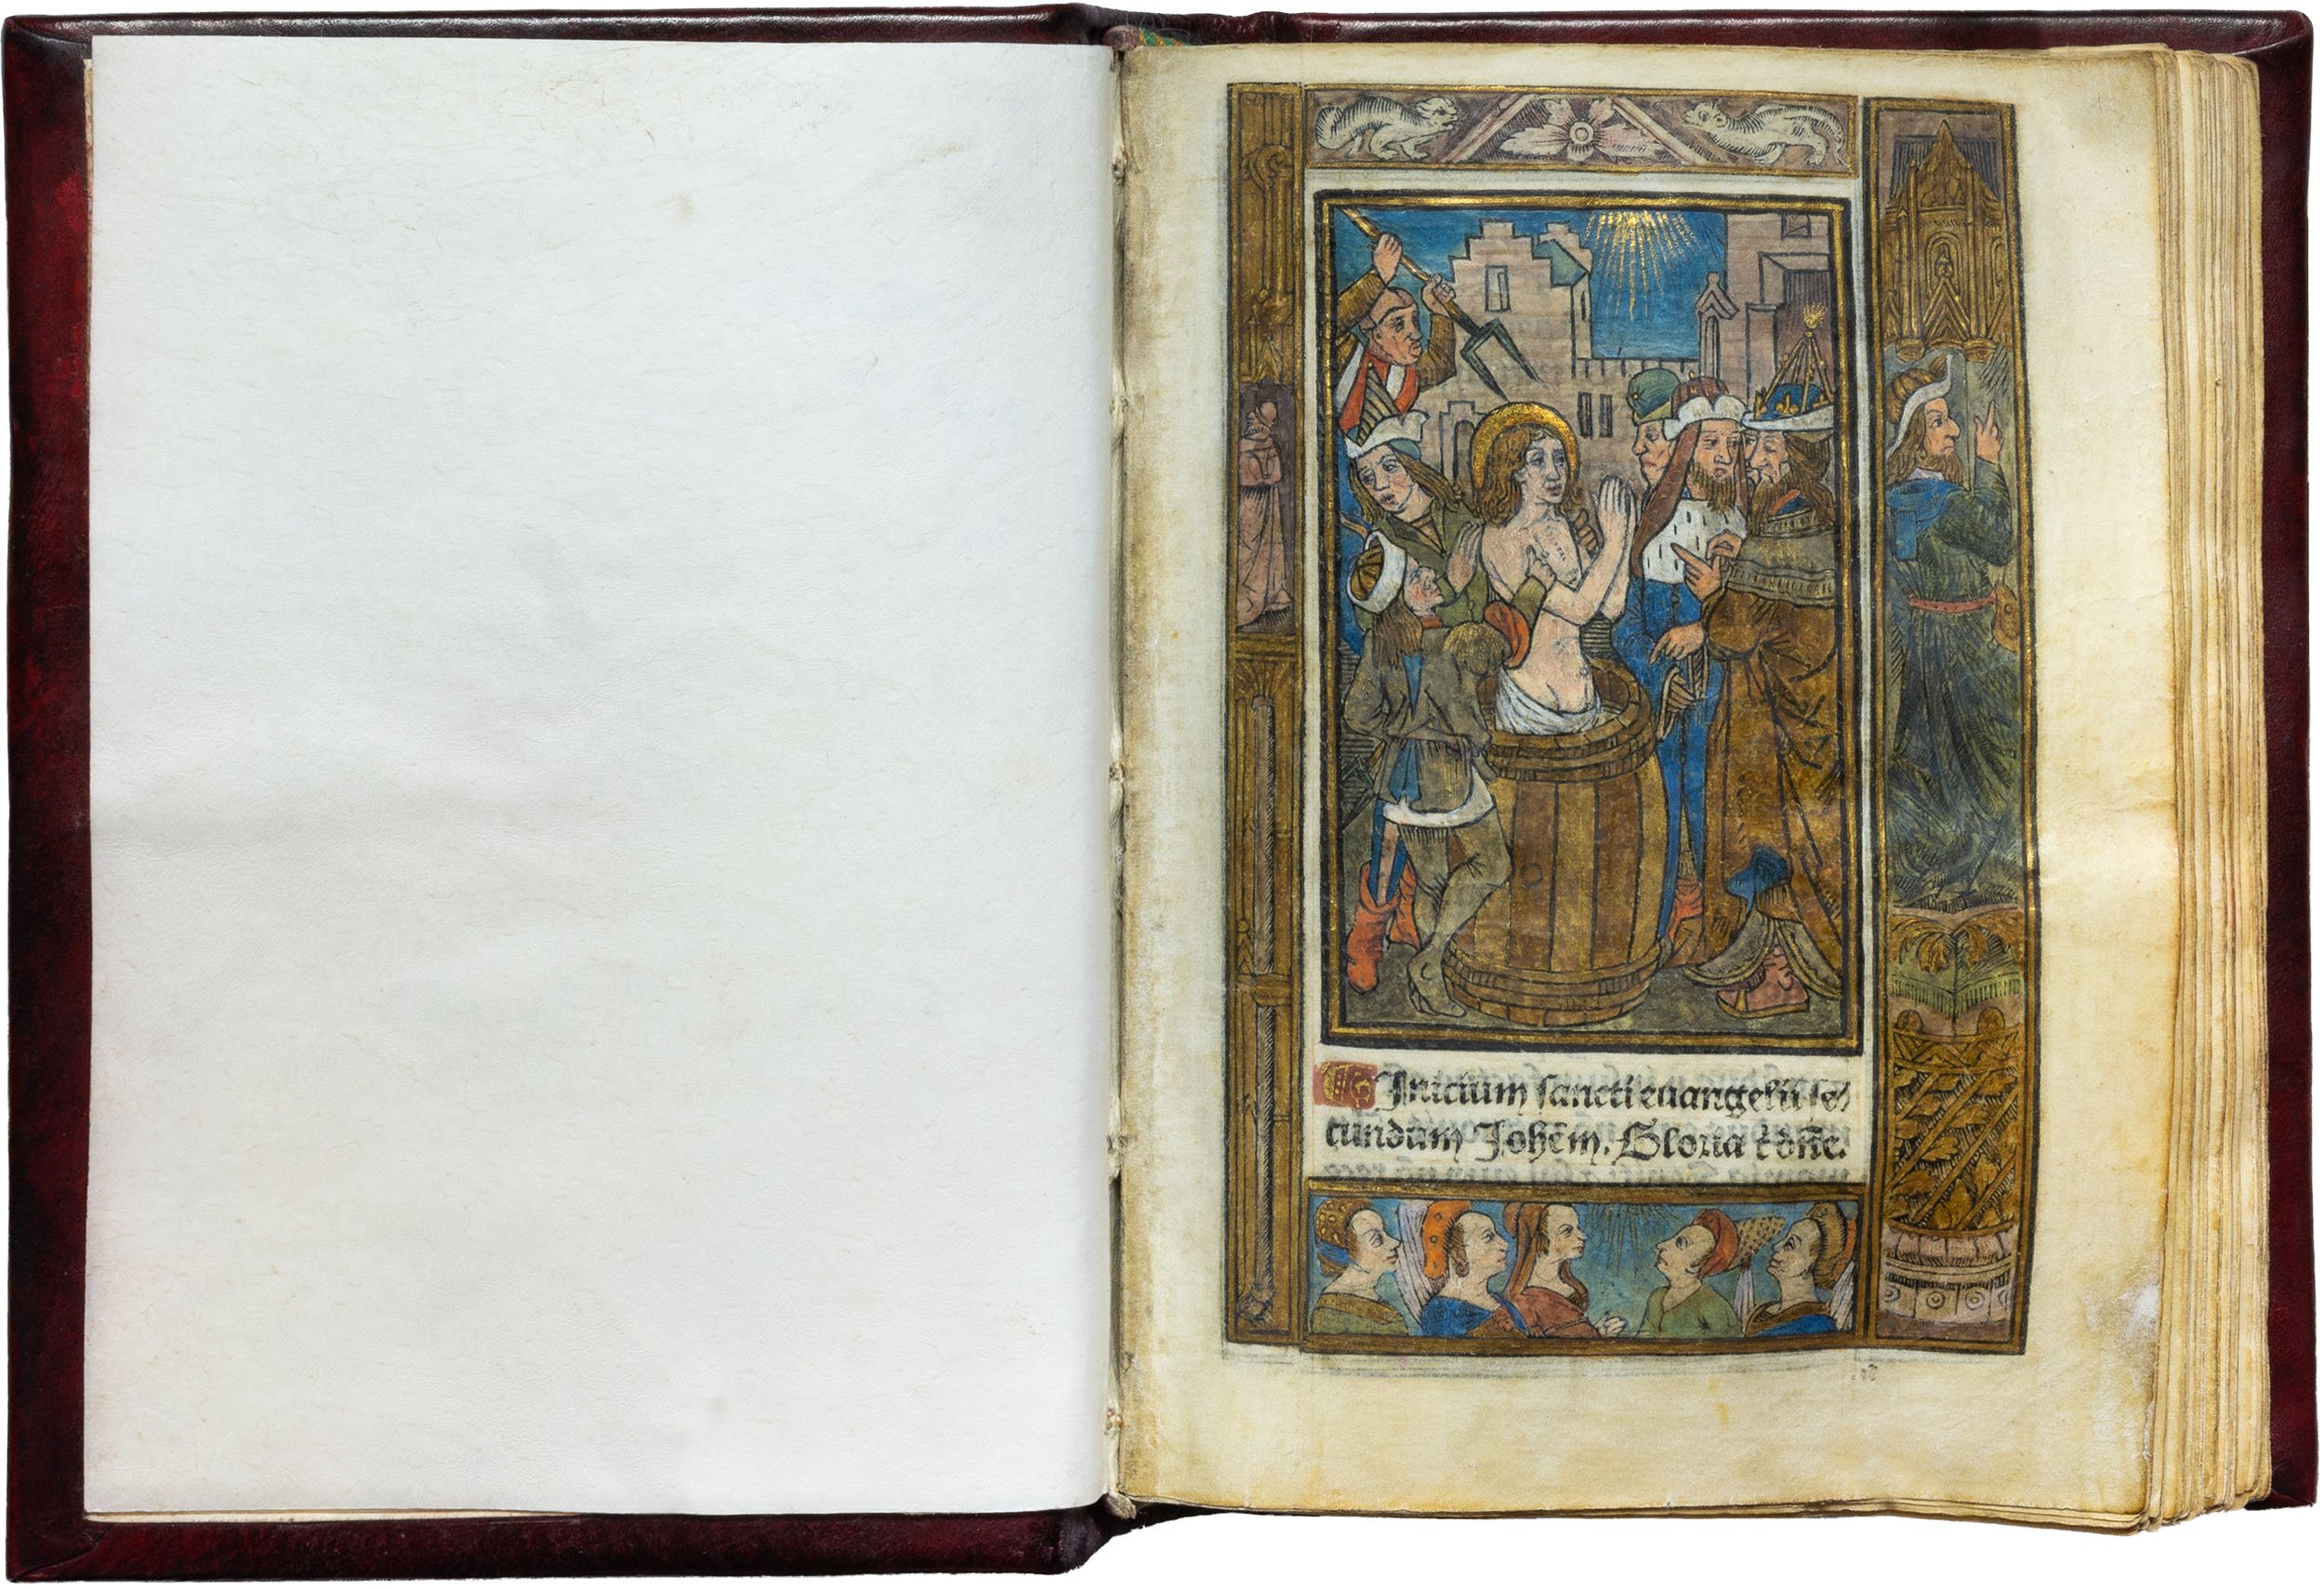 horae-bmv-early-printed-book-of-hours-1487-dupre-03.jpg